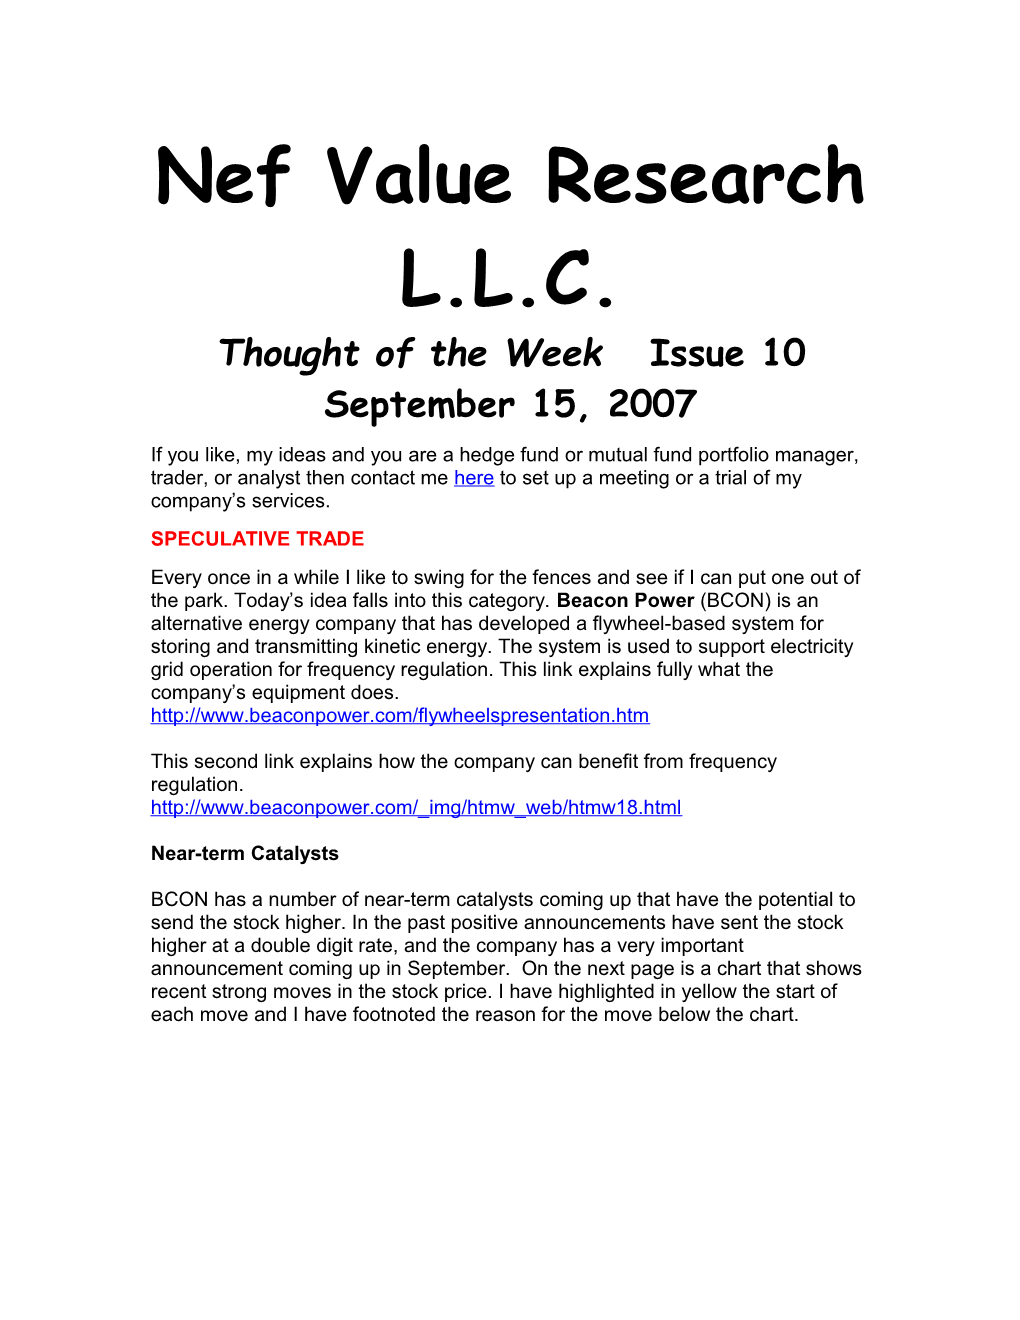 Nef Value Research L